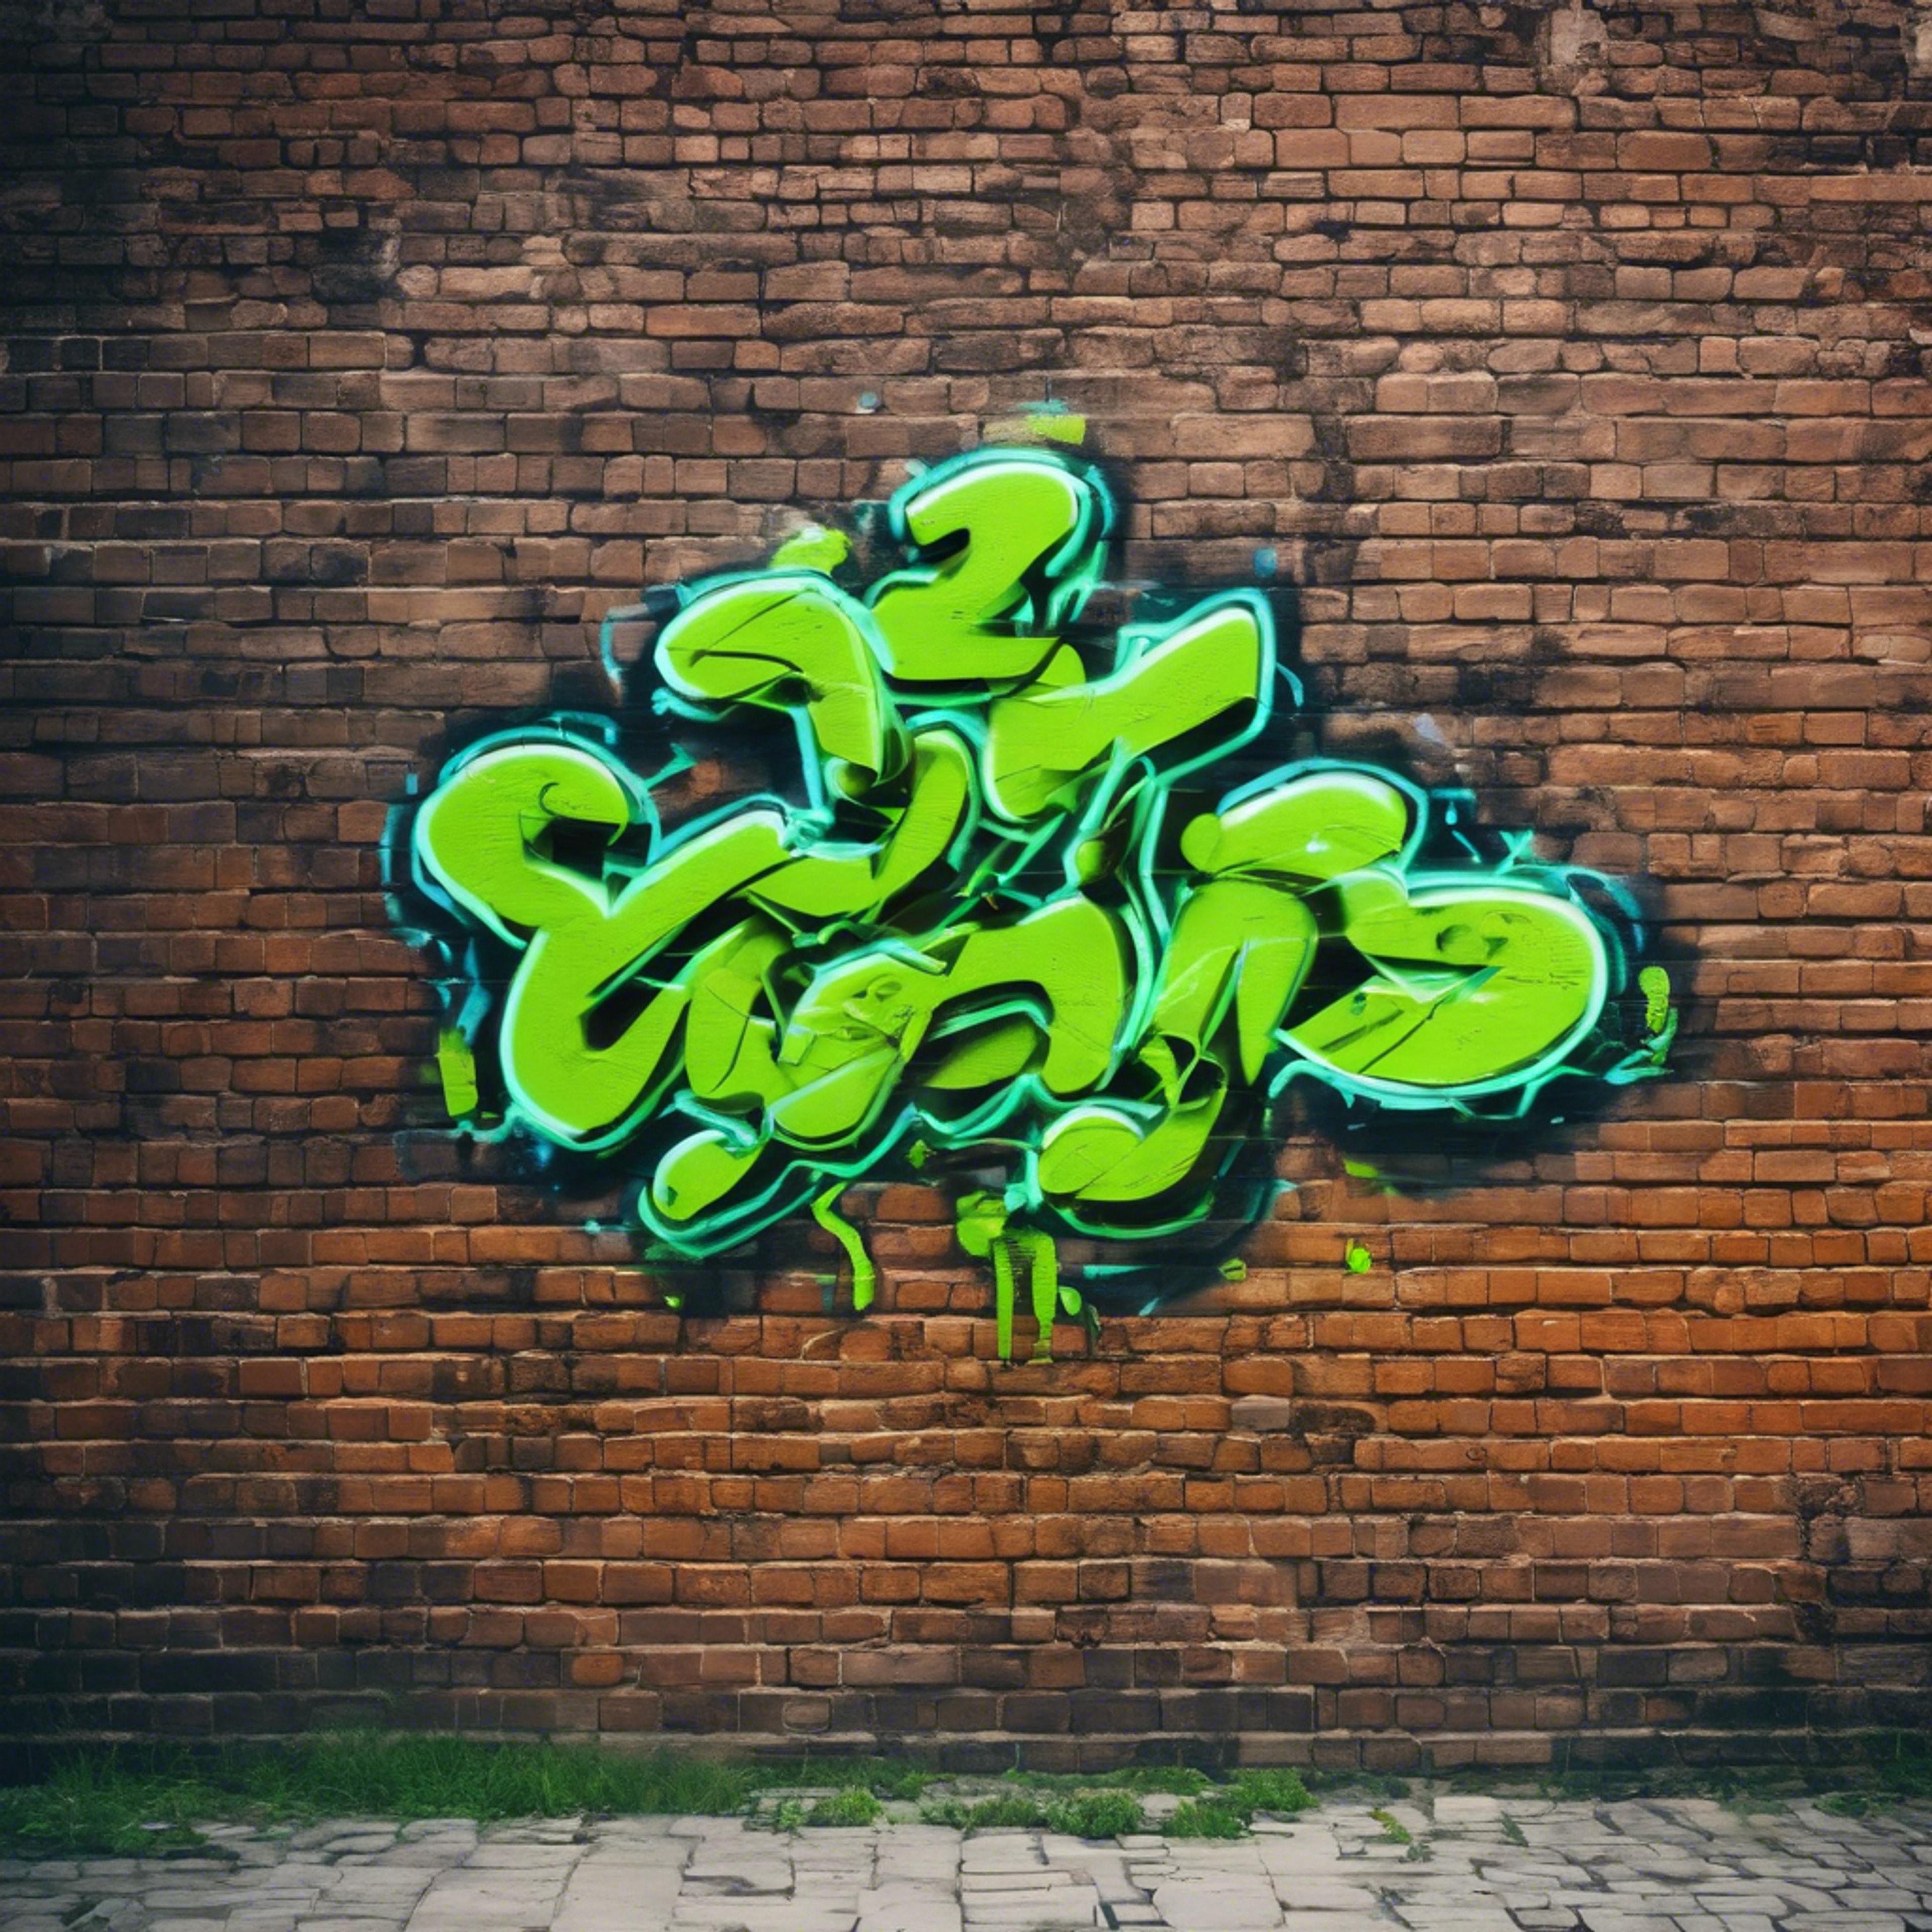 Cool neon green graffiti on an old brick wall in an urban setting. Papel de parede[8032604dbabf4a1691c6]